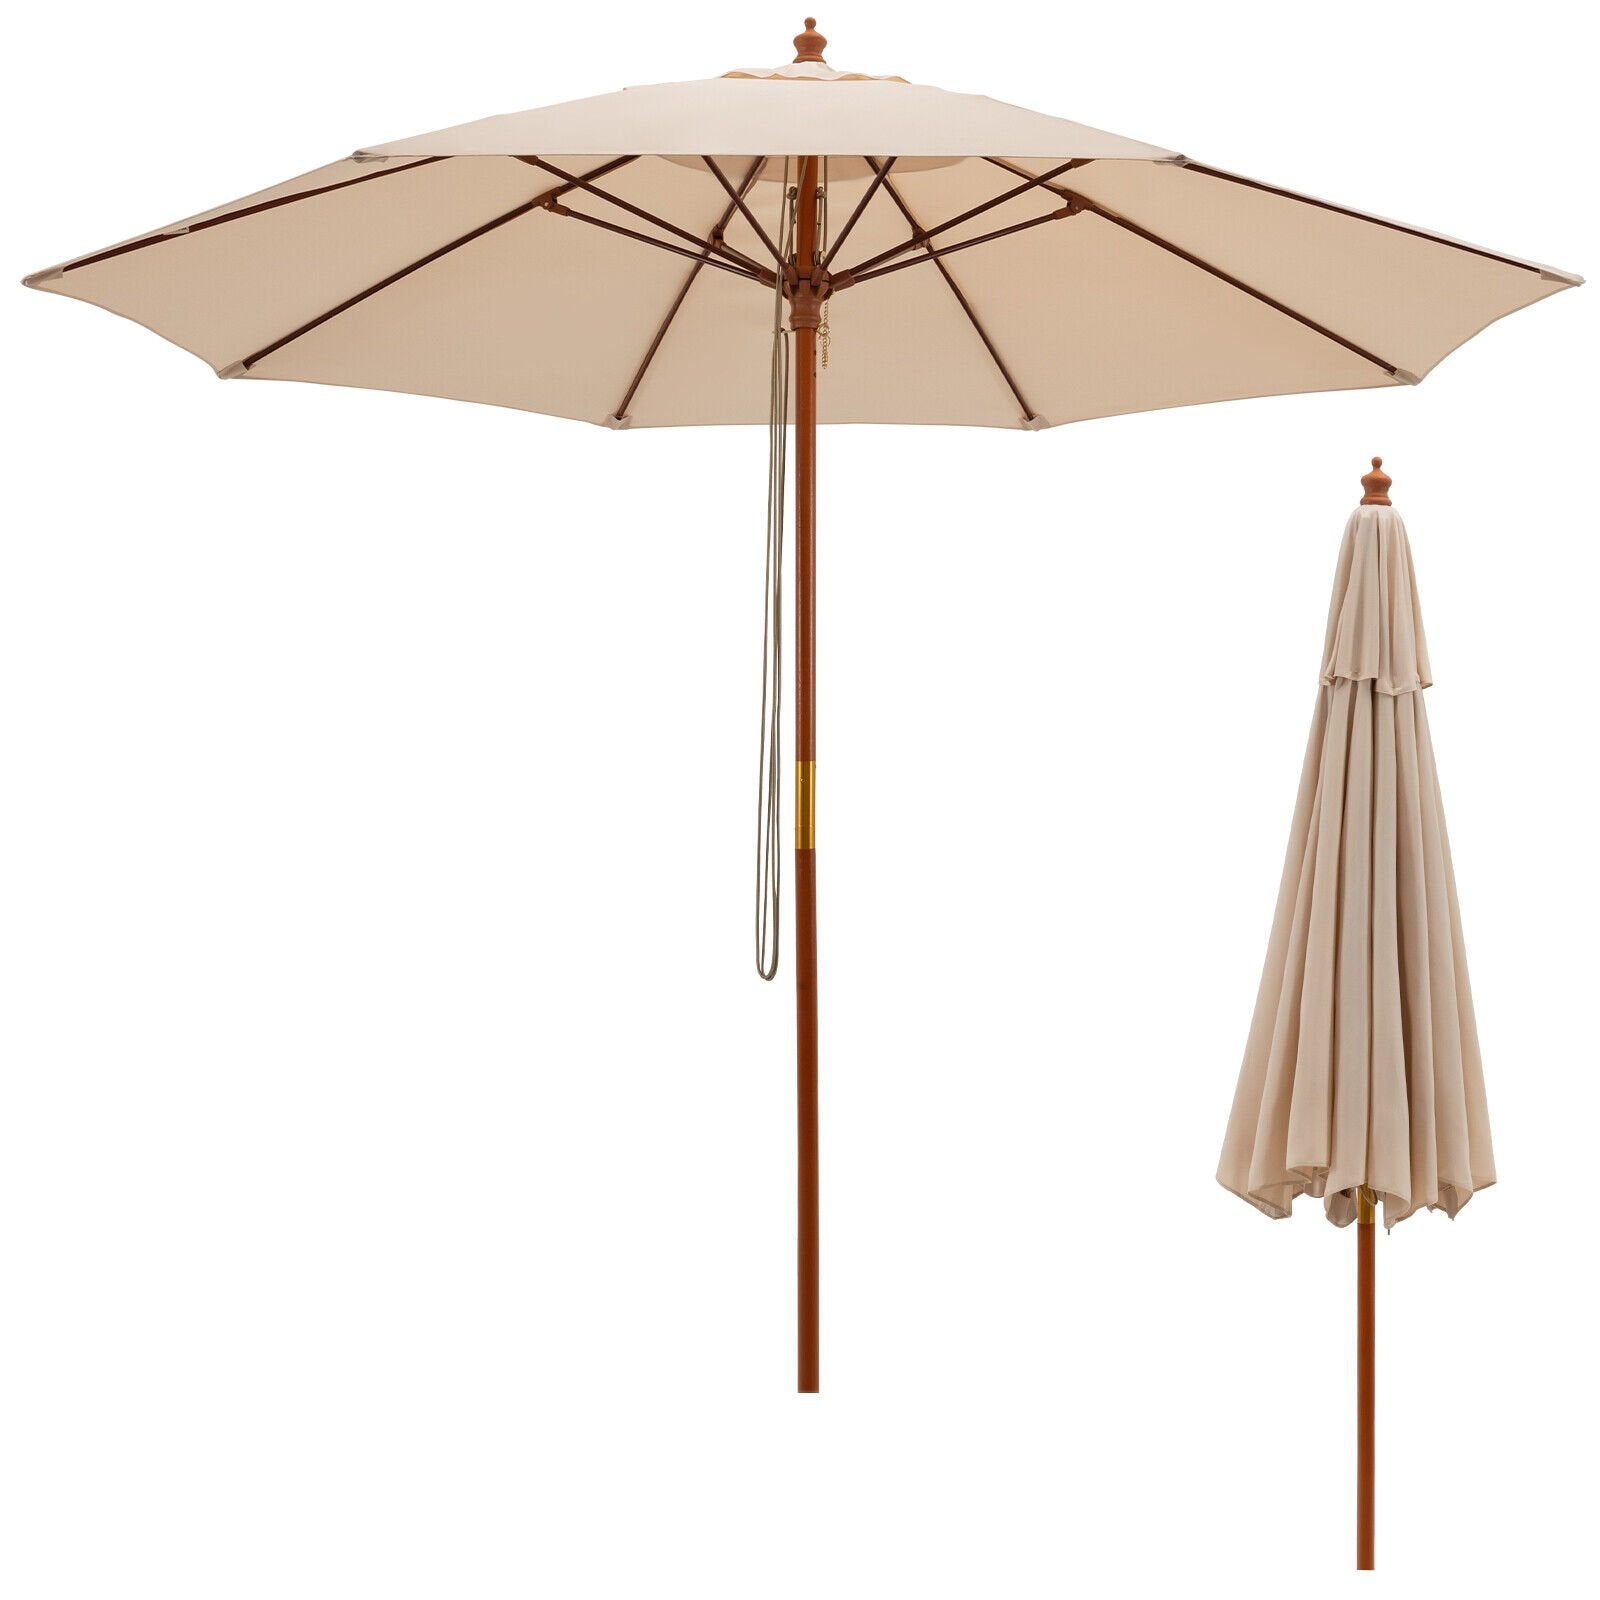 9.5 Feet Pulley Lift Round Patio Umbrella with Fiberglass Ribs, Beige - Gallery Canada